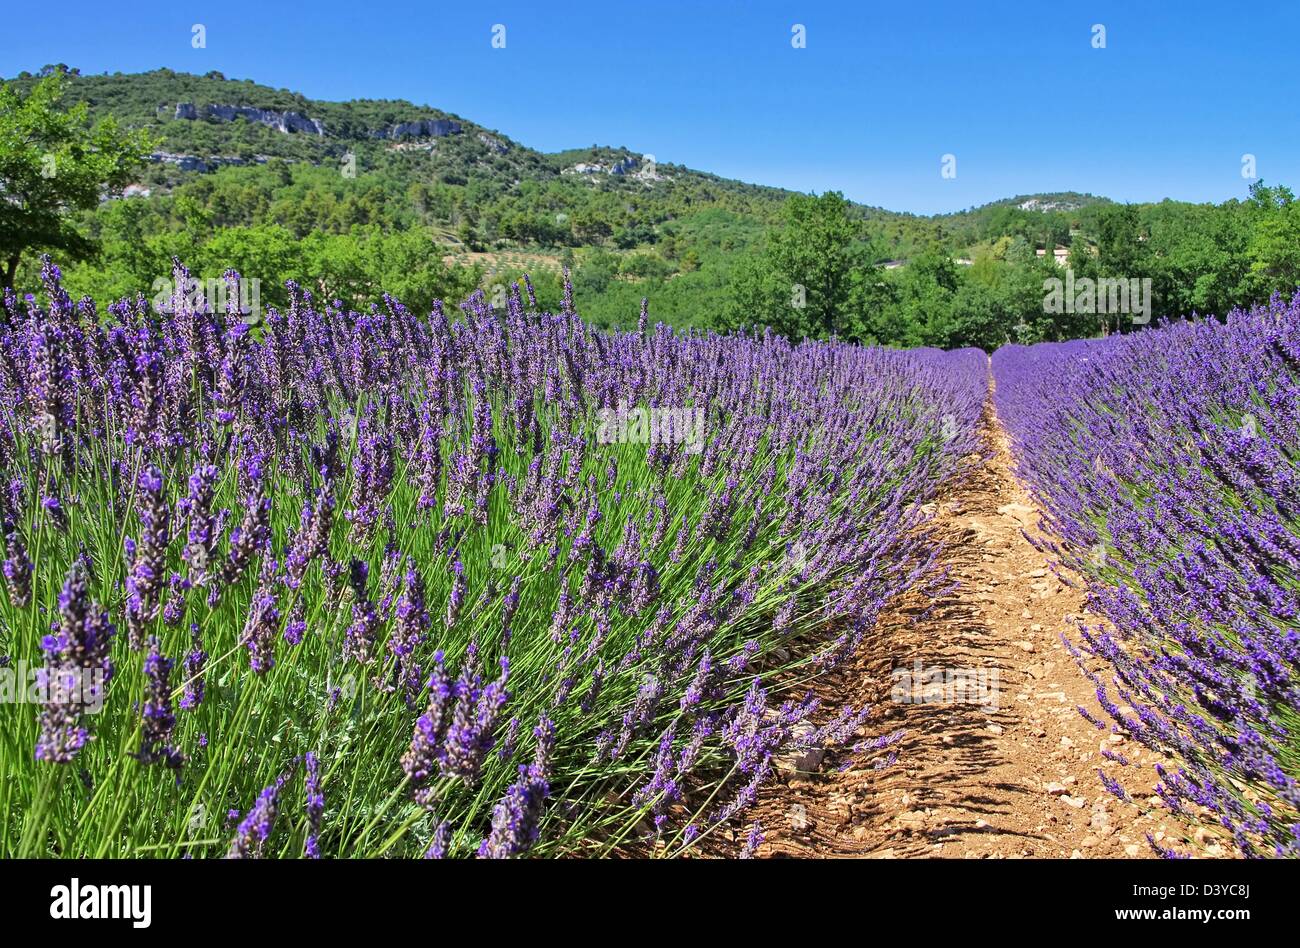 Lavendelfeld - lavender field 39 Stock Photo